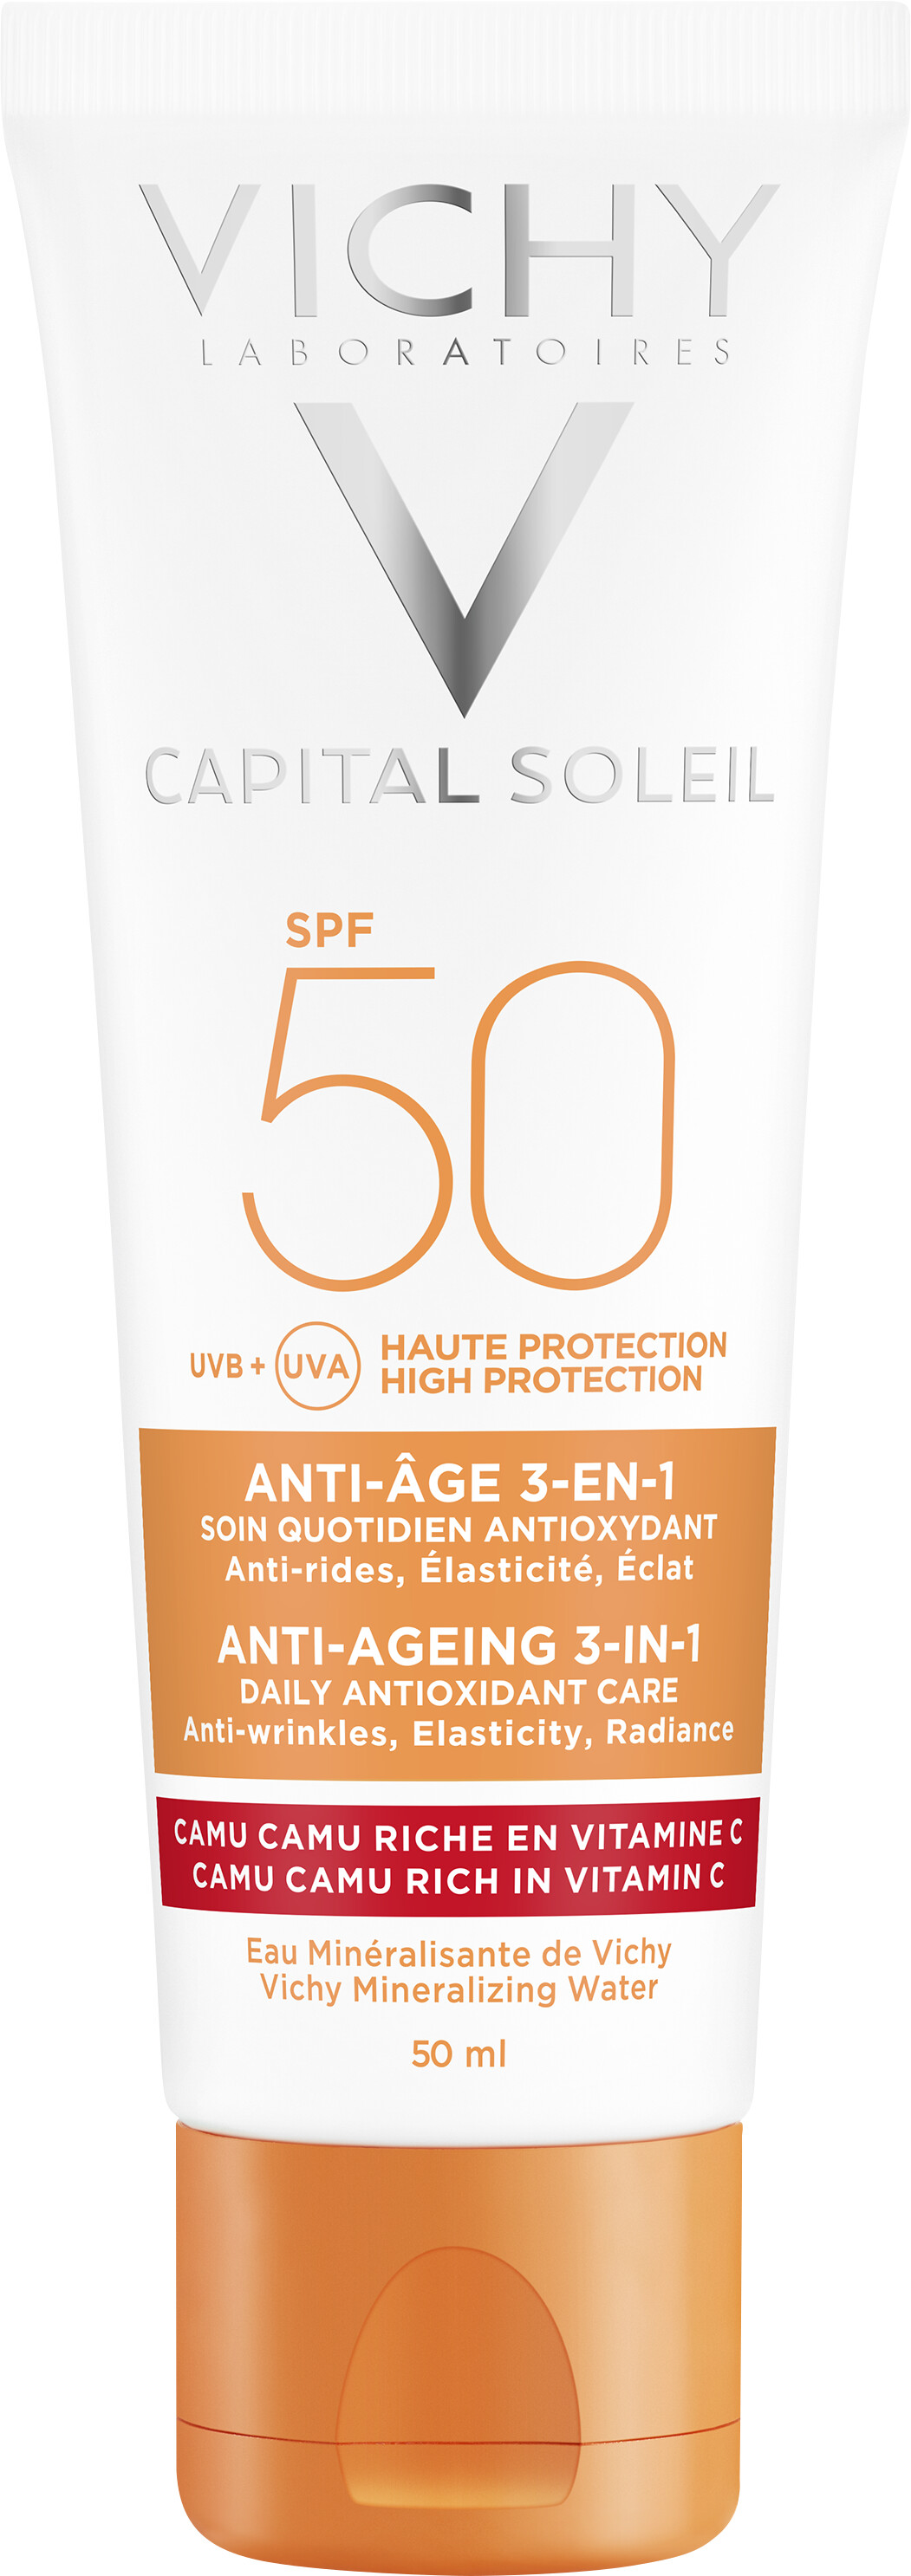 Vichy Capital Soleil Anti-Ageing 3-In-1 Daily Antioxidant Care SPF50 50ml